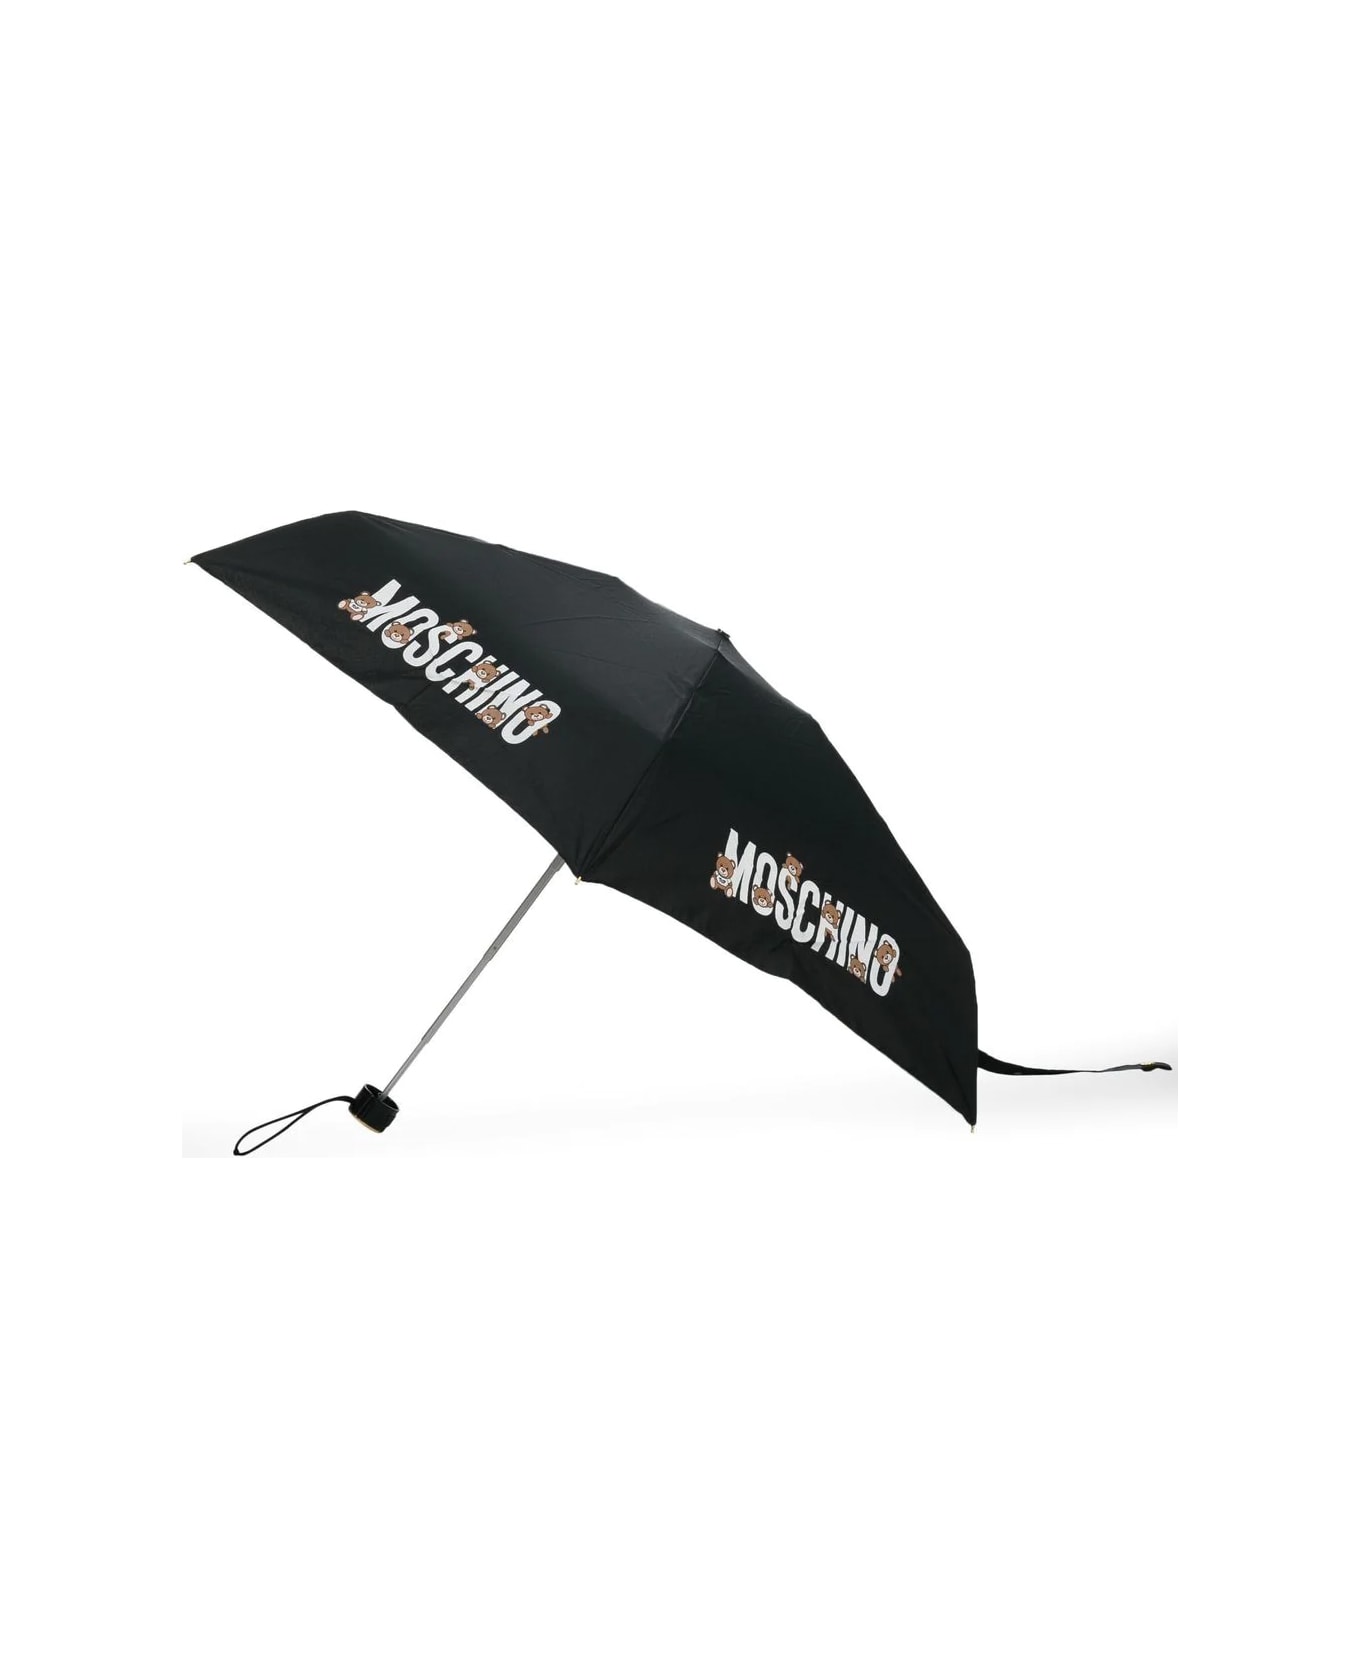 Moschino Bear Logo Box Supermini Umbrella - A Black